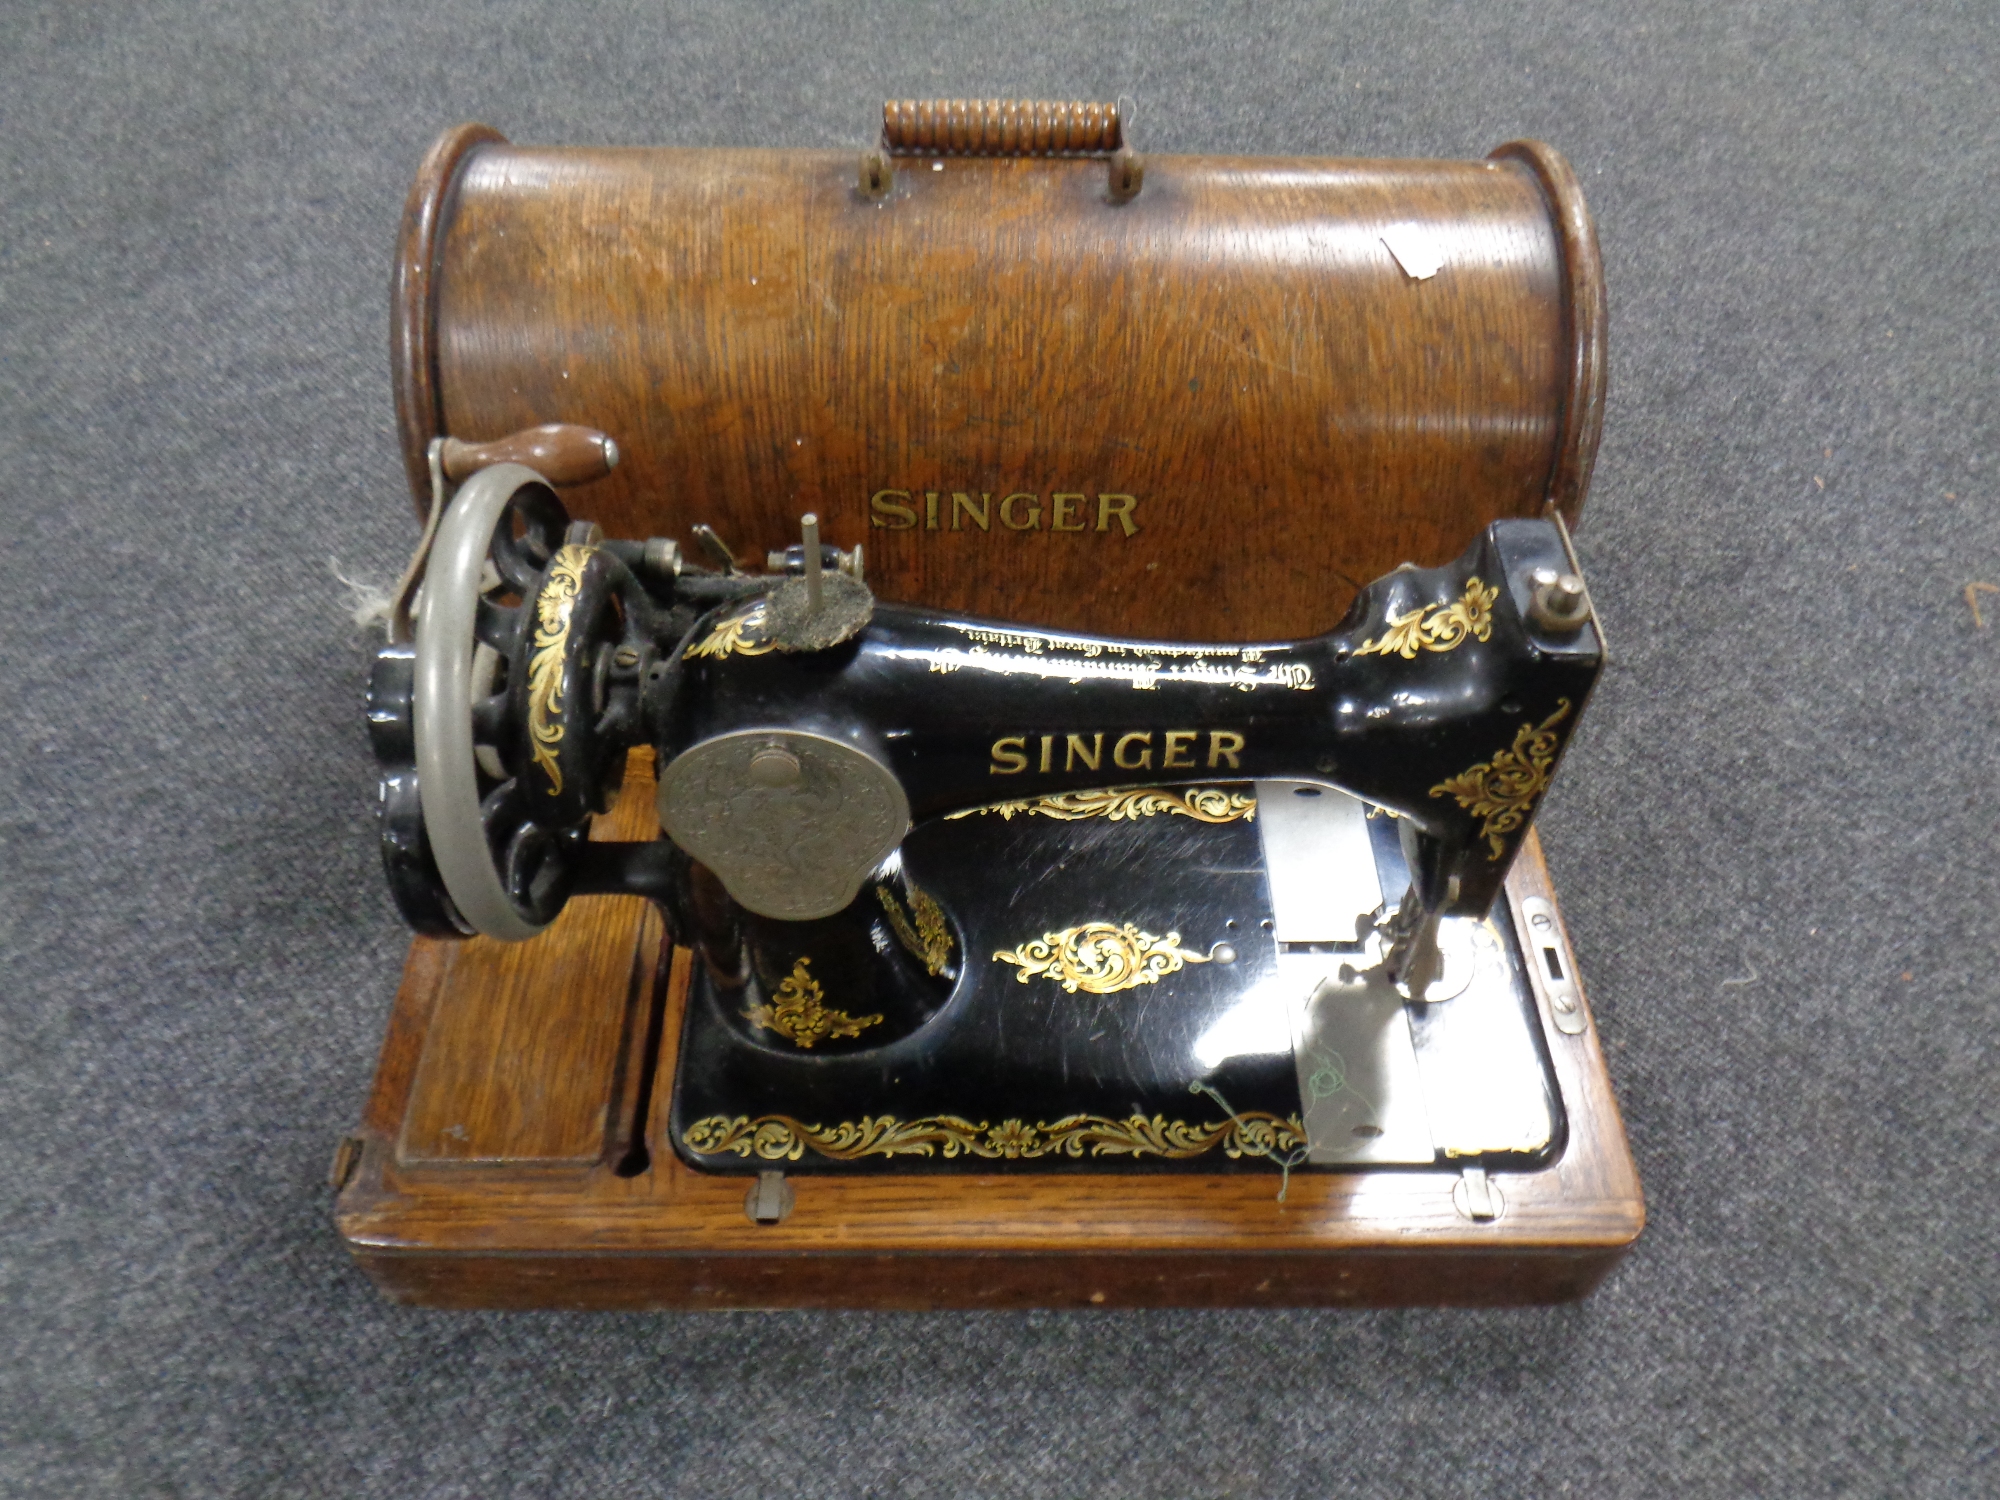 A vintage Singer hand sewing machine in case